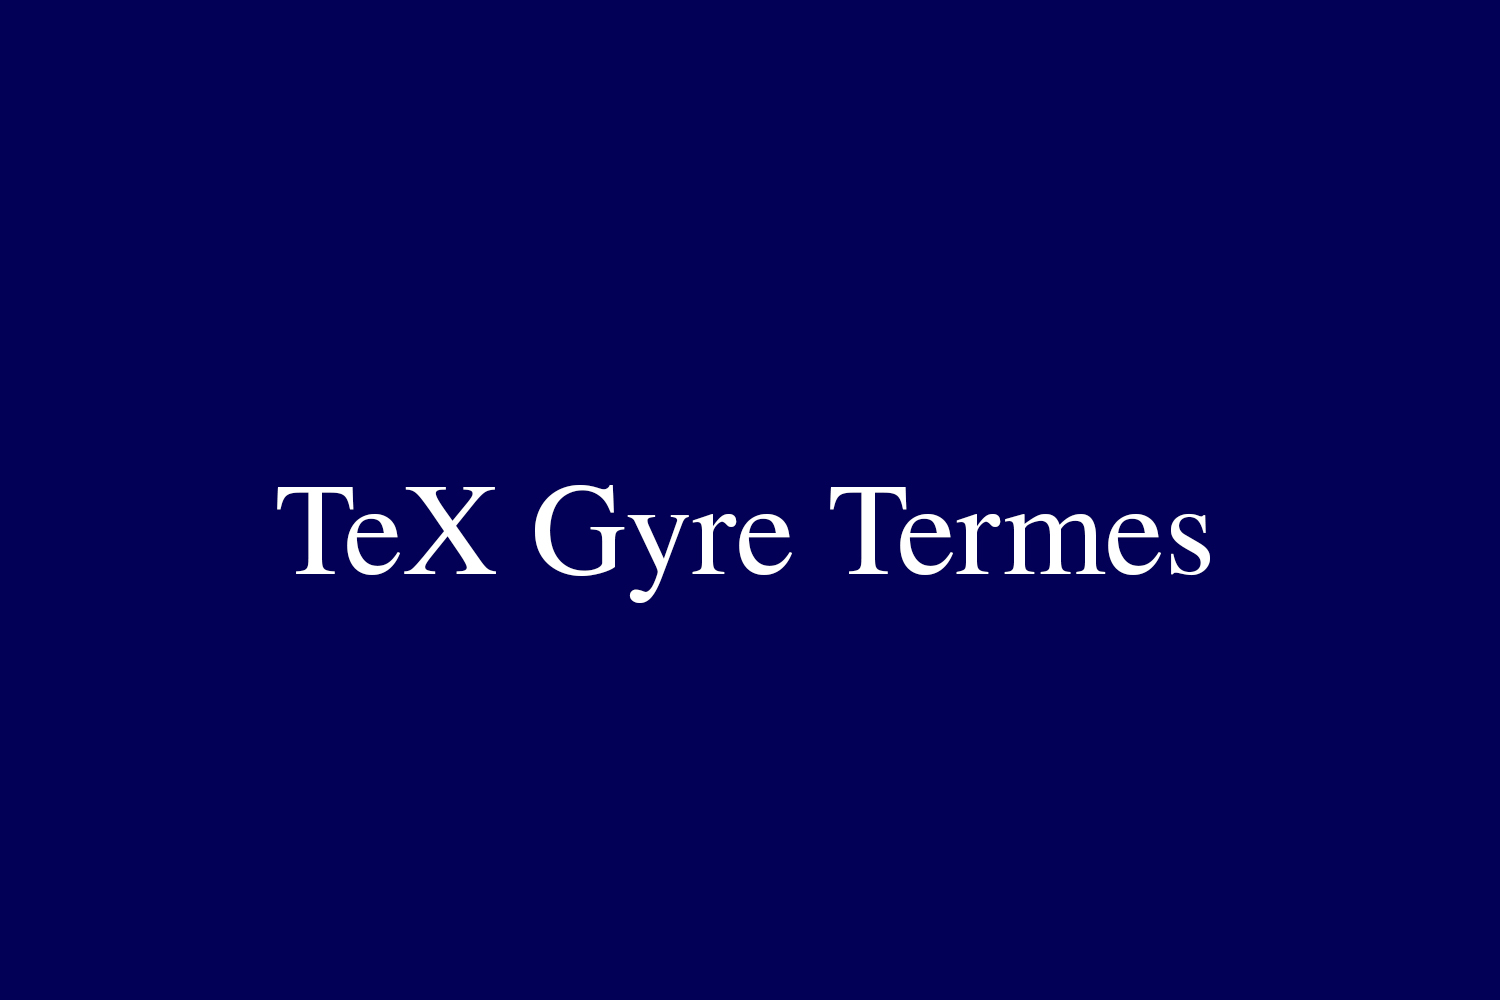 TeX Gyre Termes